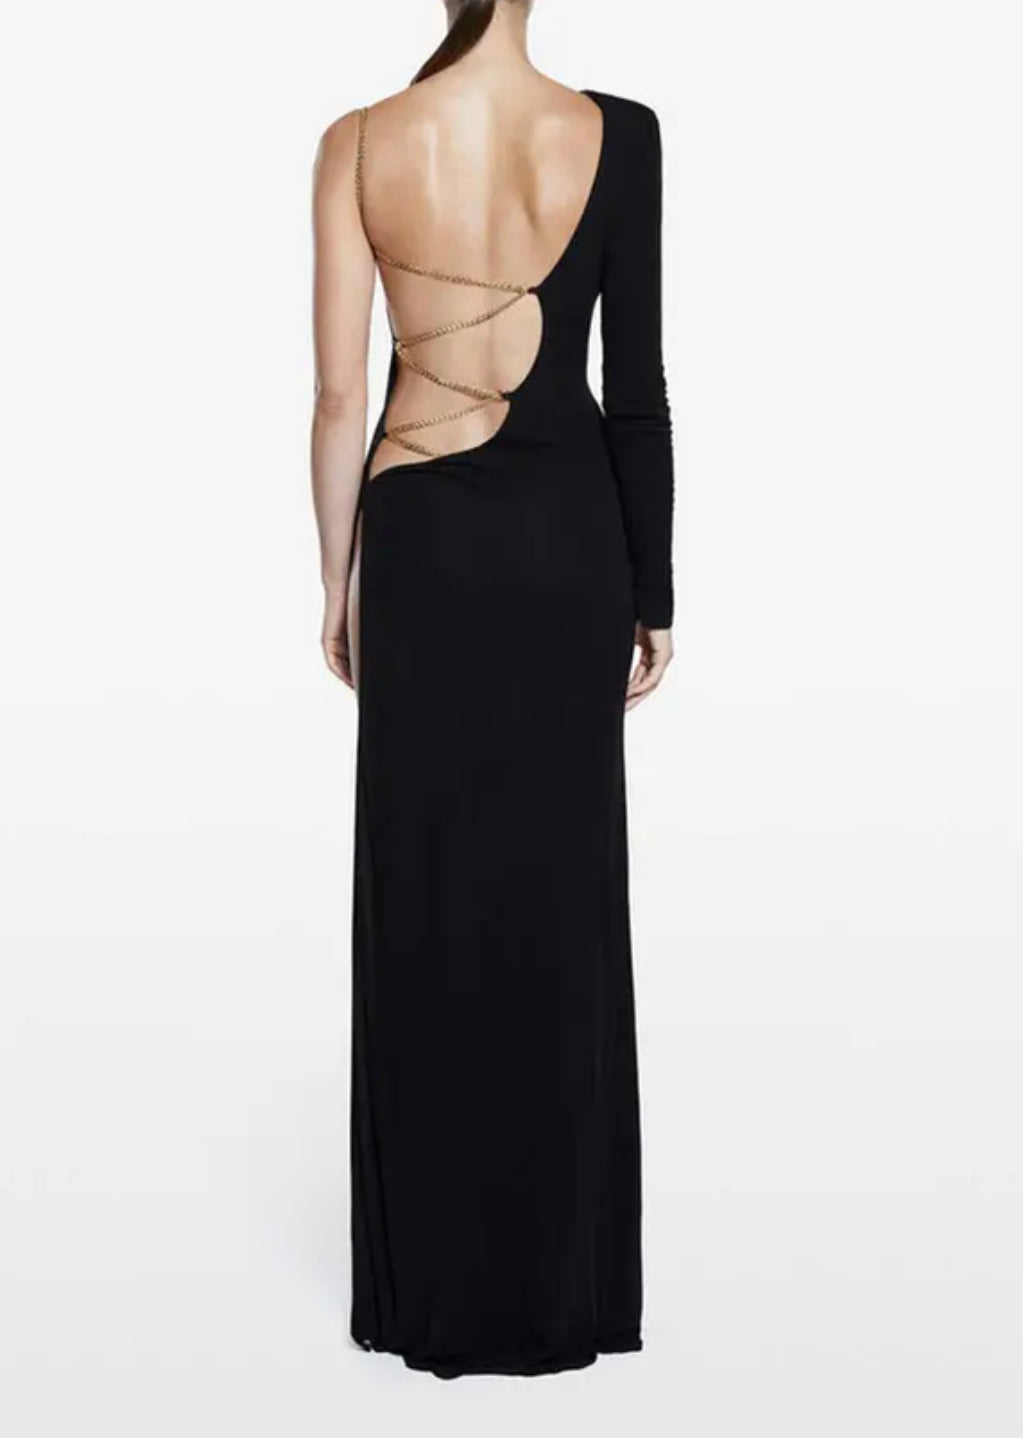 Mila Black Cutout Chained Dress